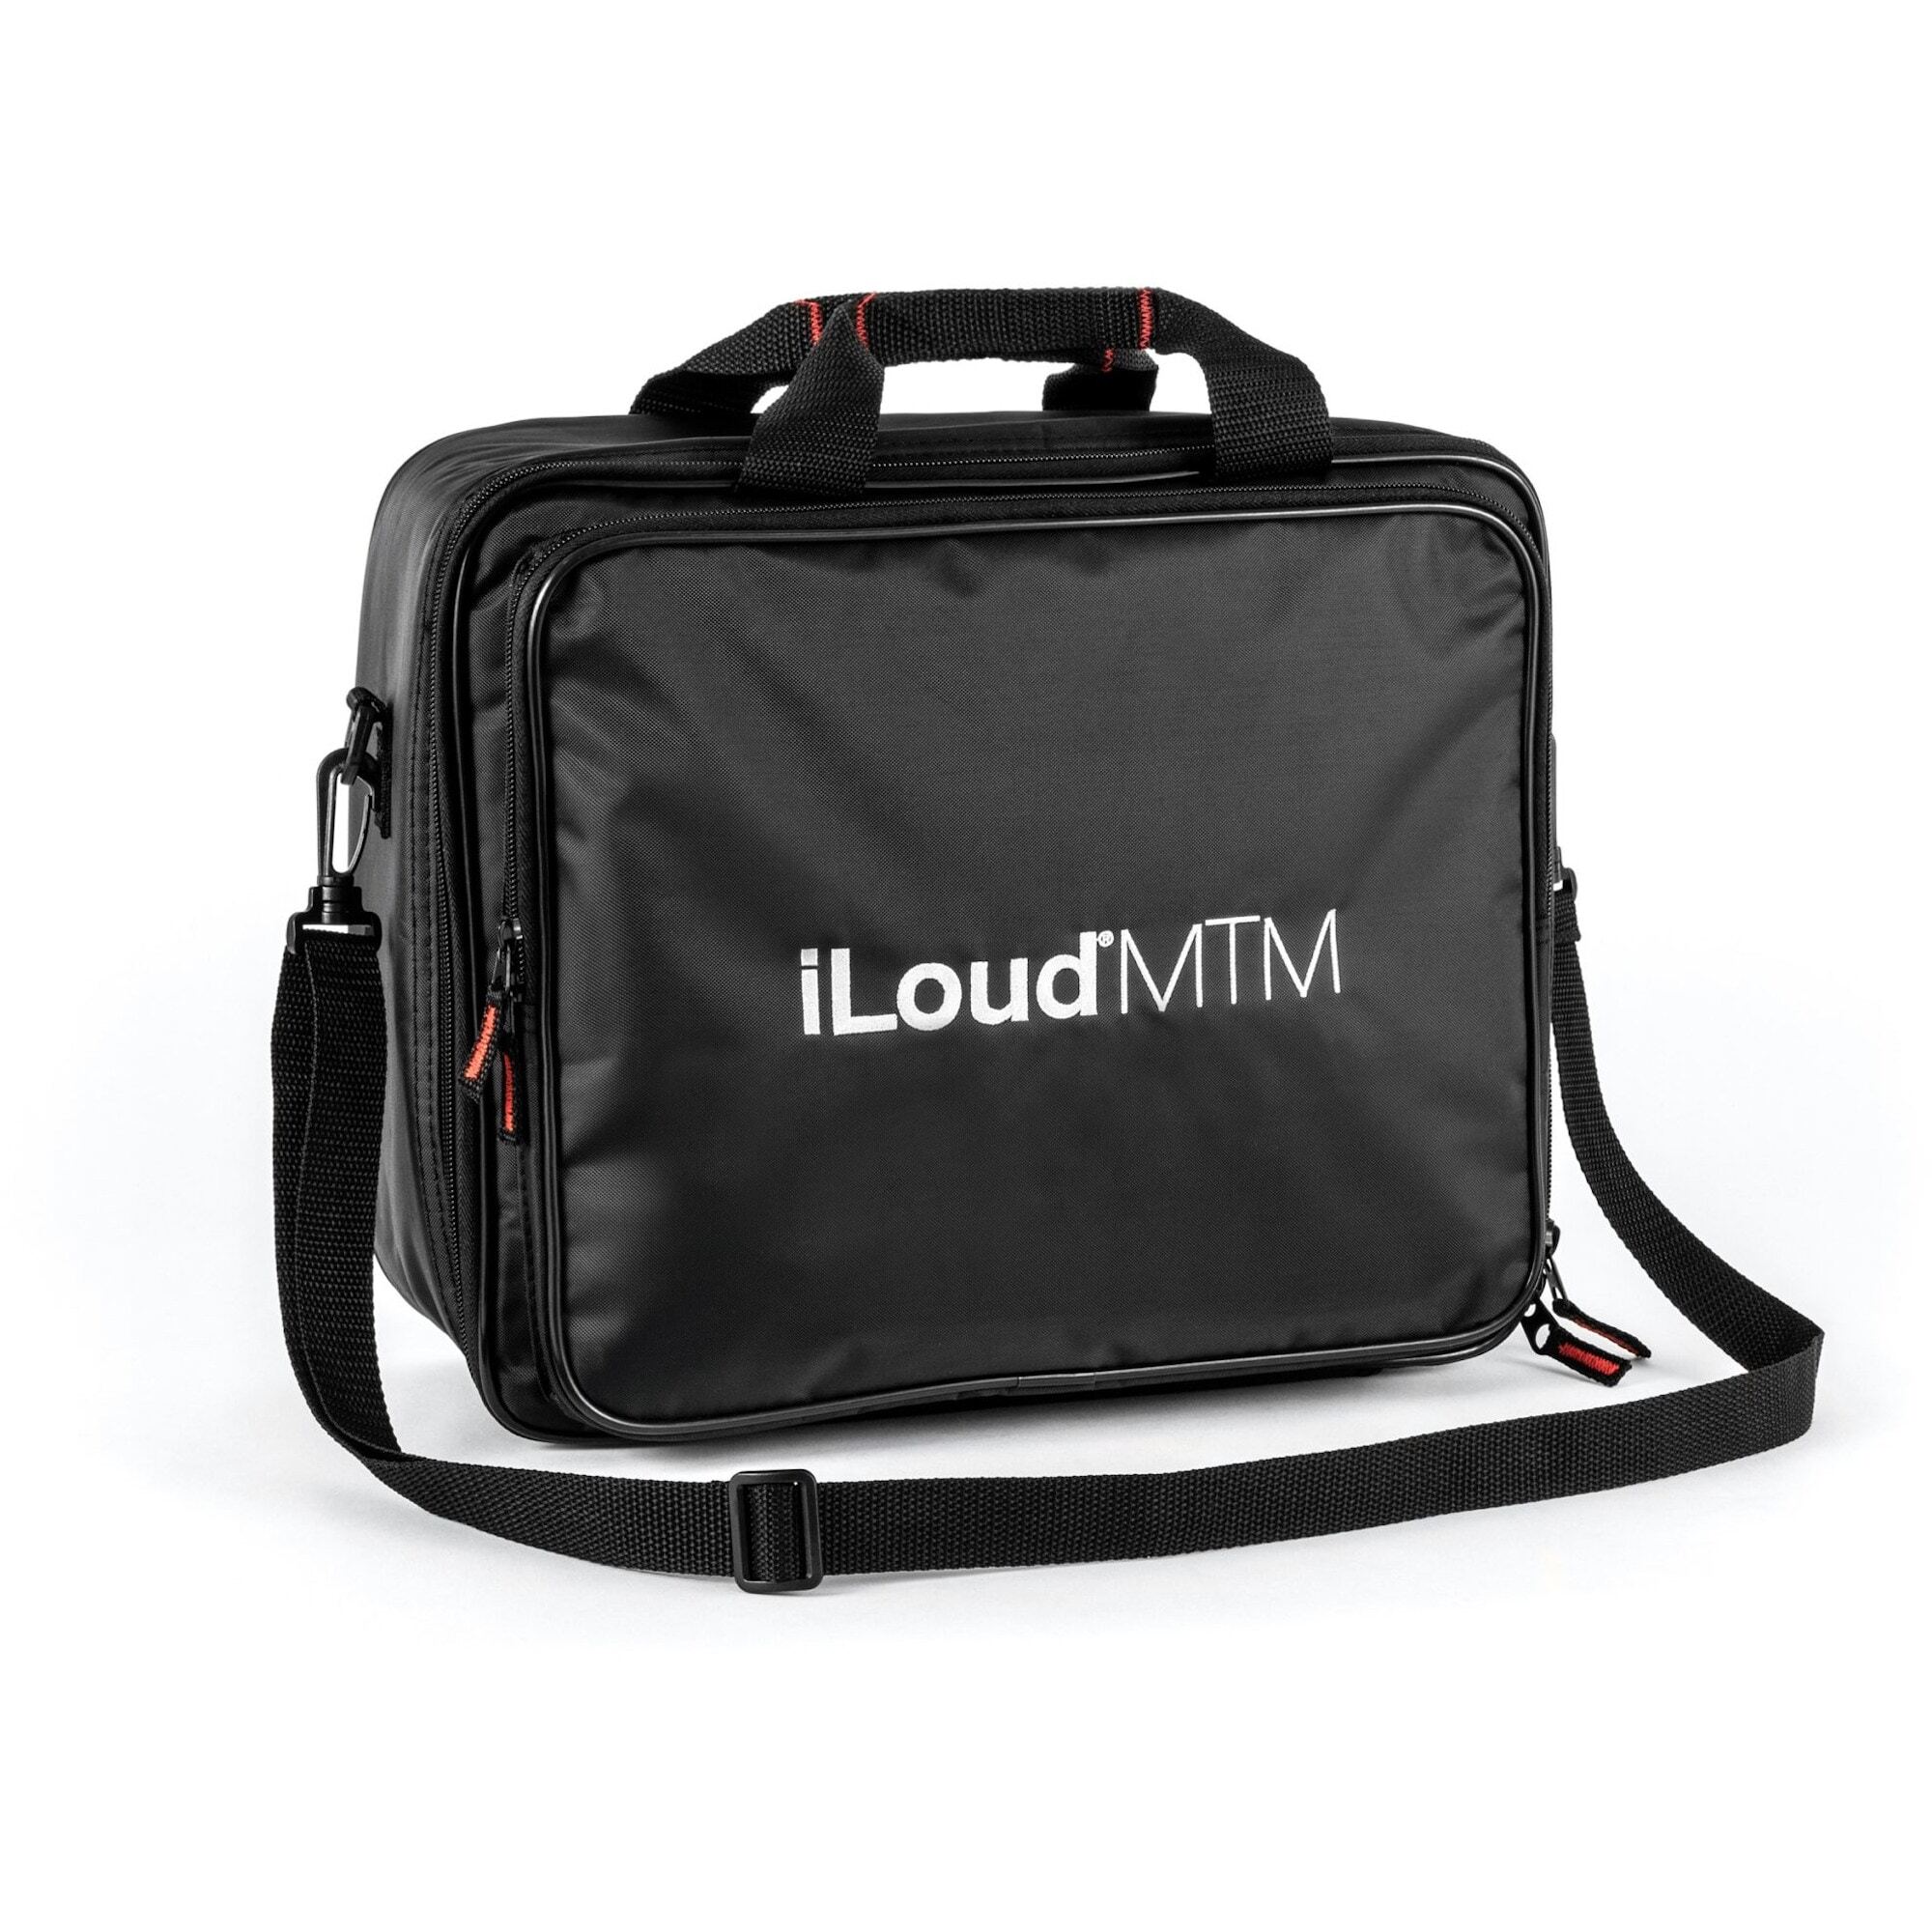 IK Multimedia iLoud MTM travel bag